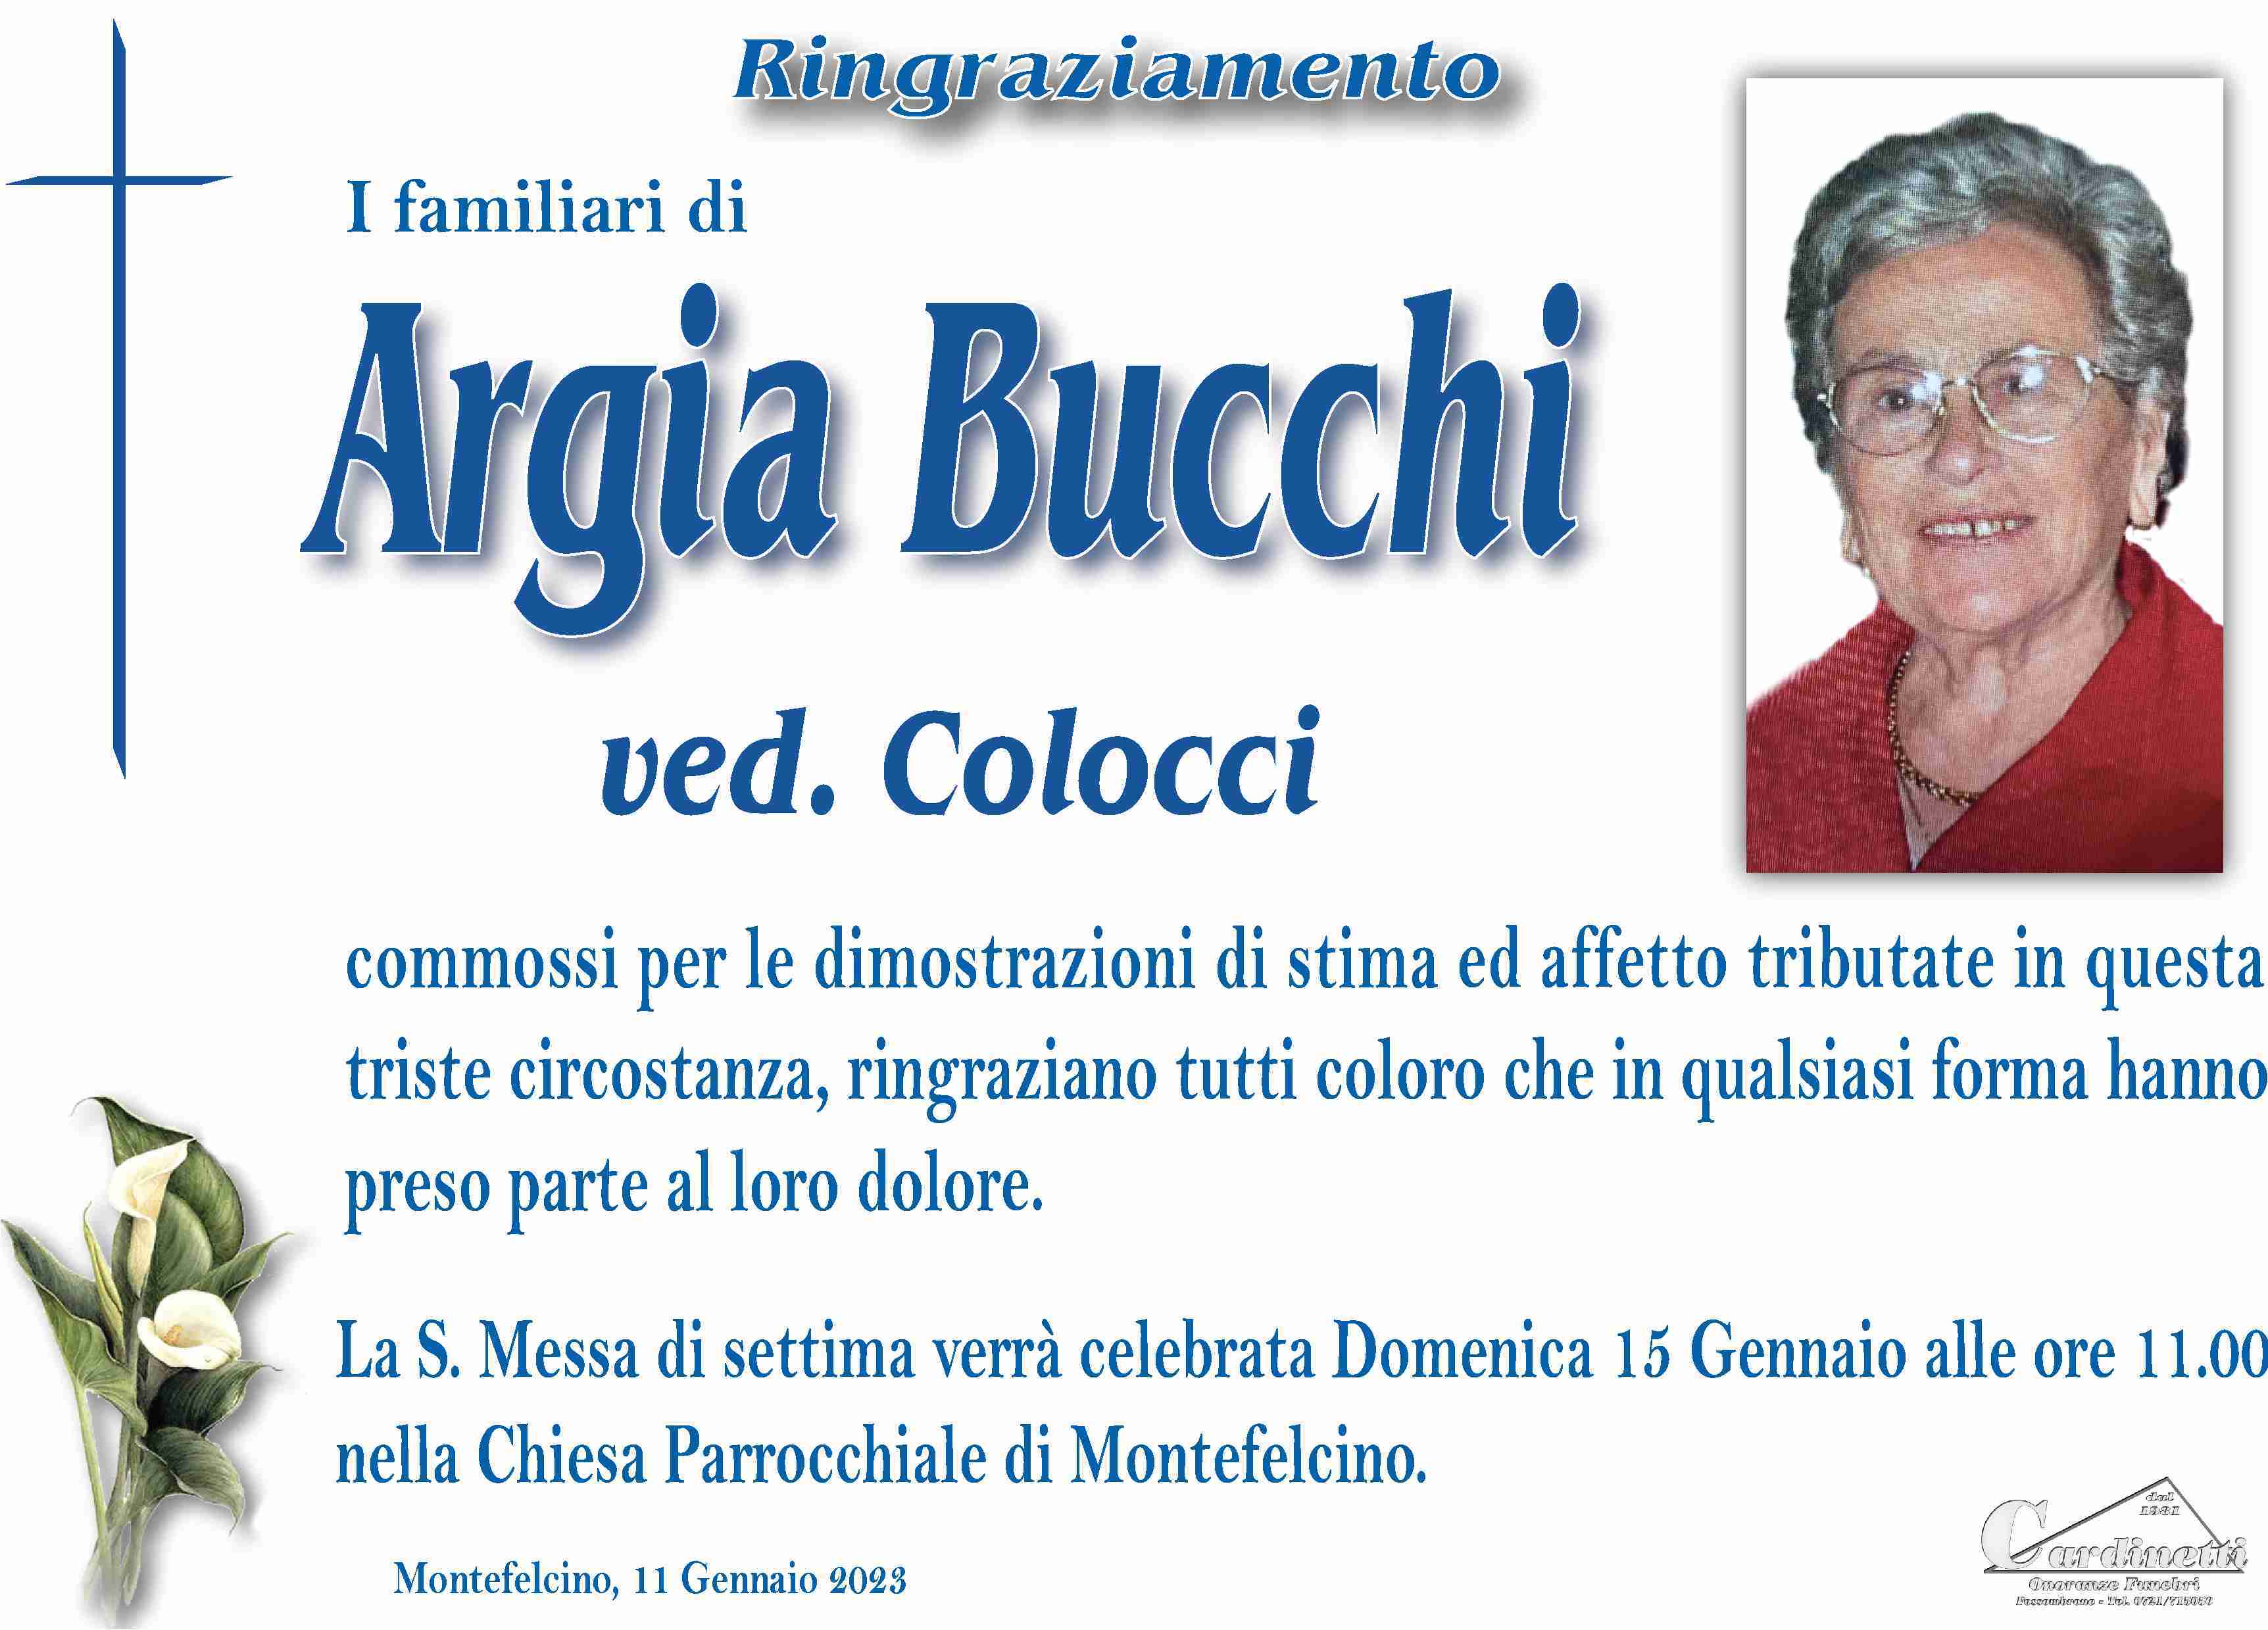 Argia Bucchi